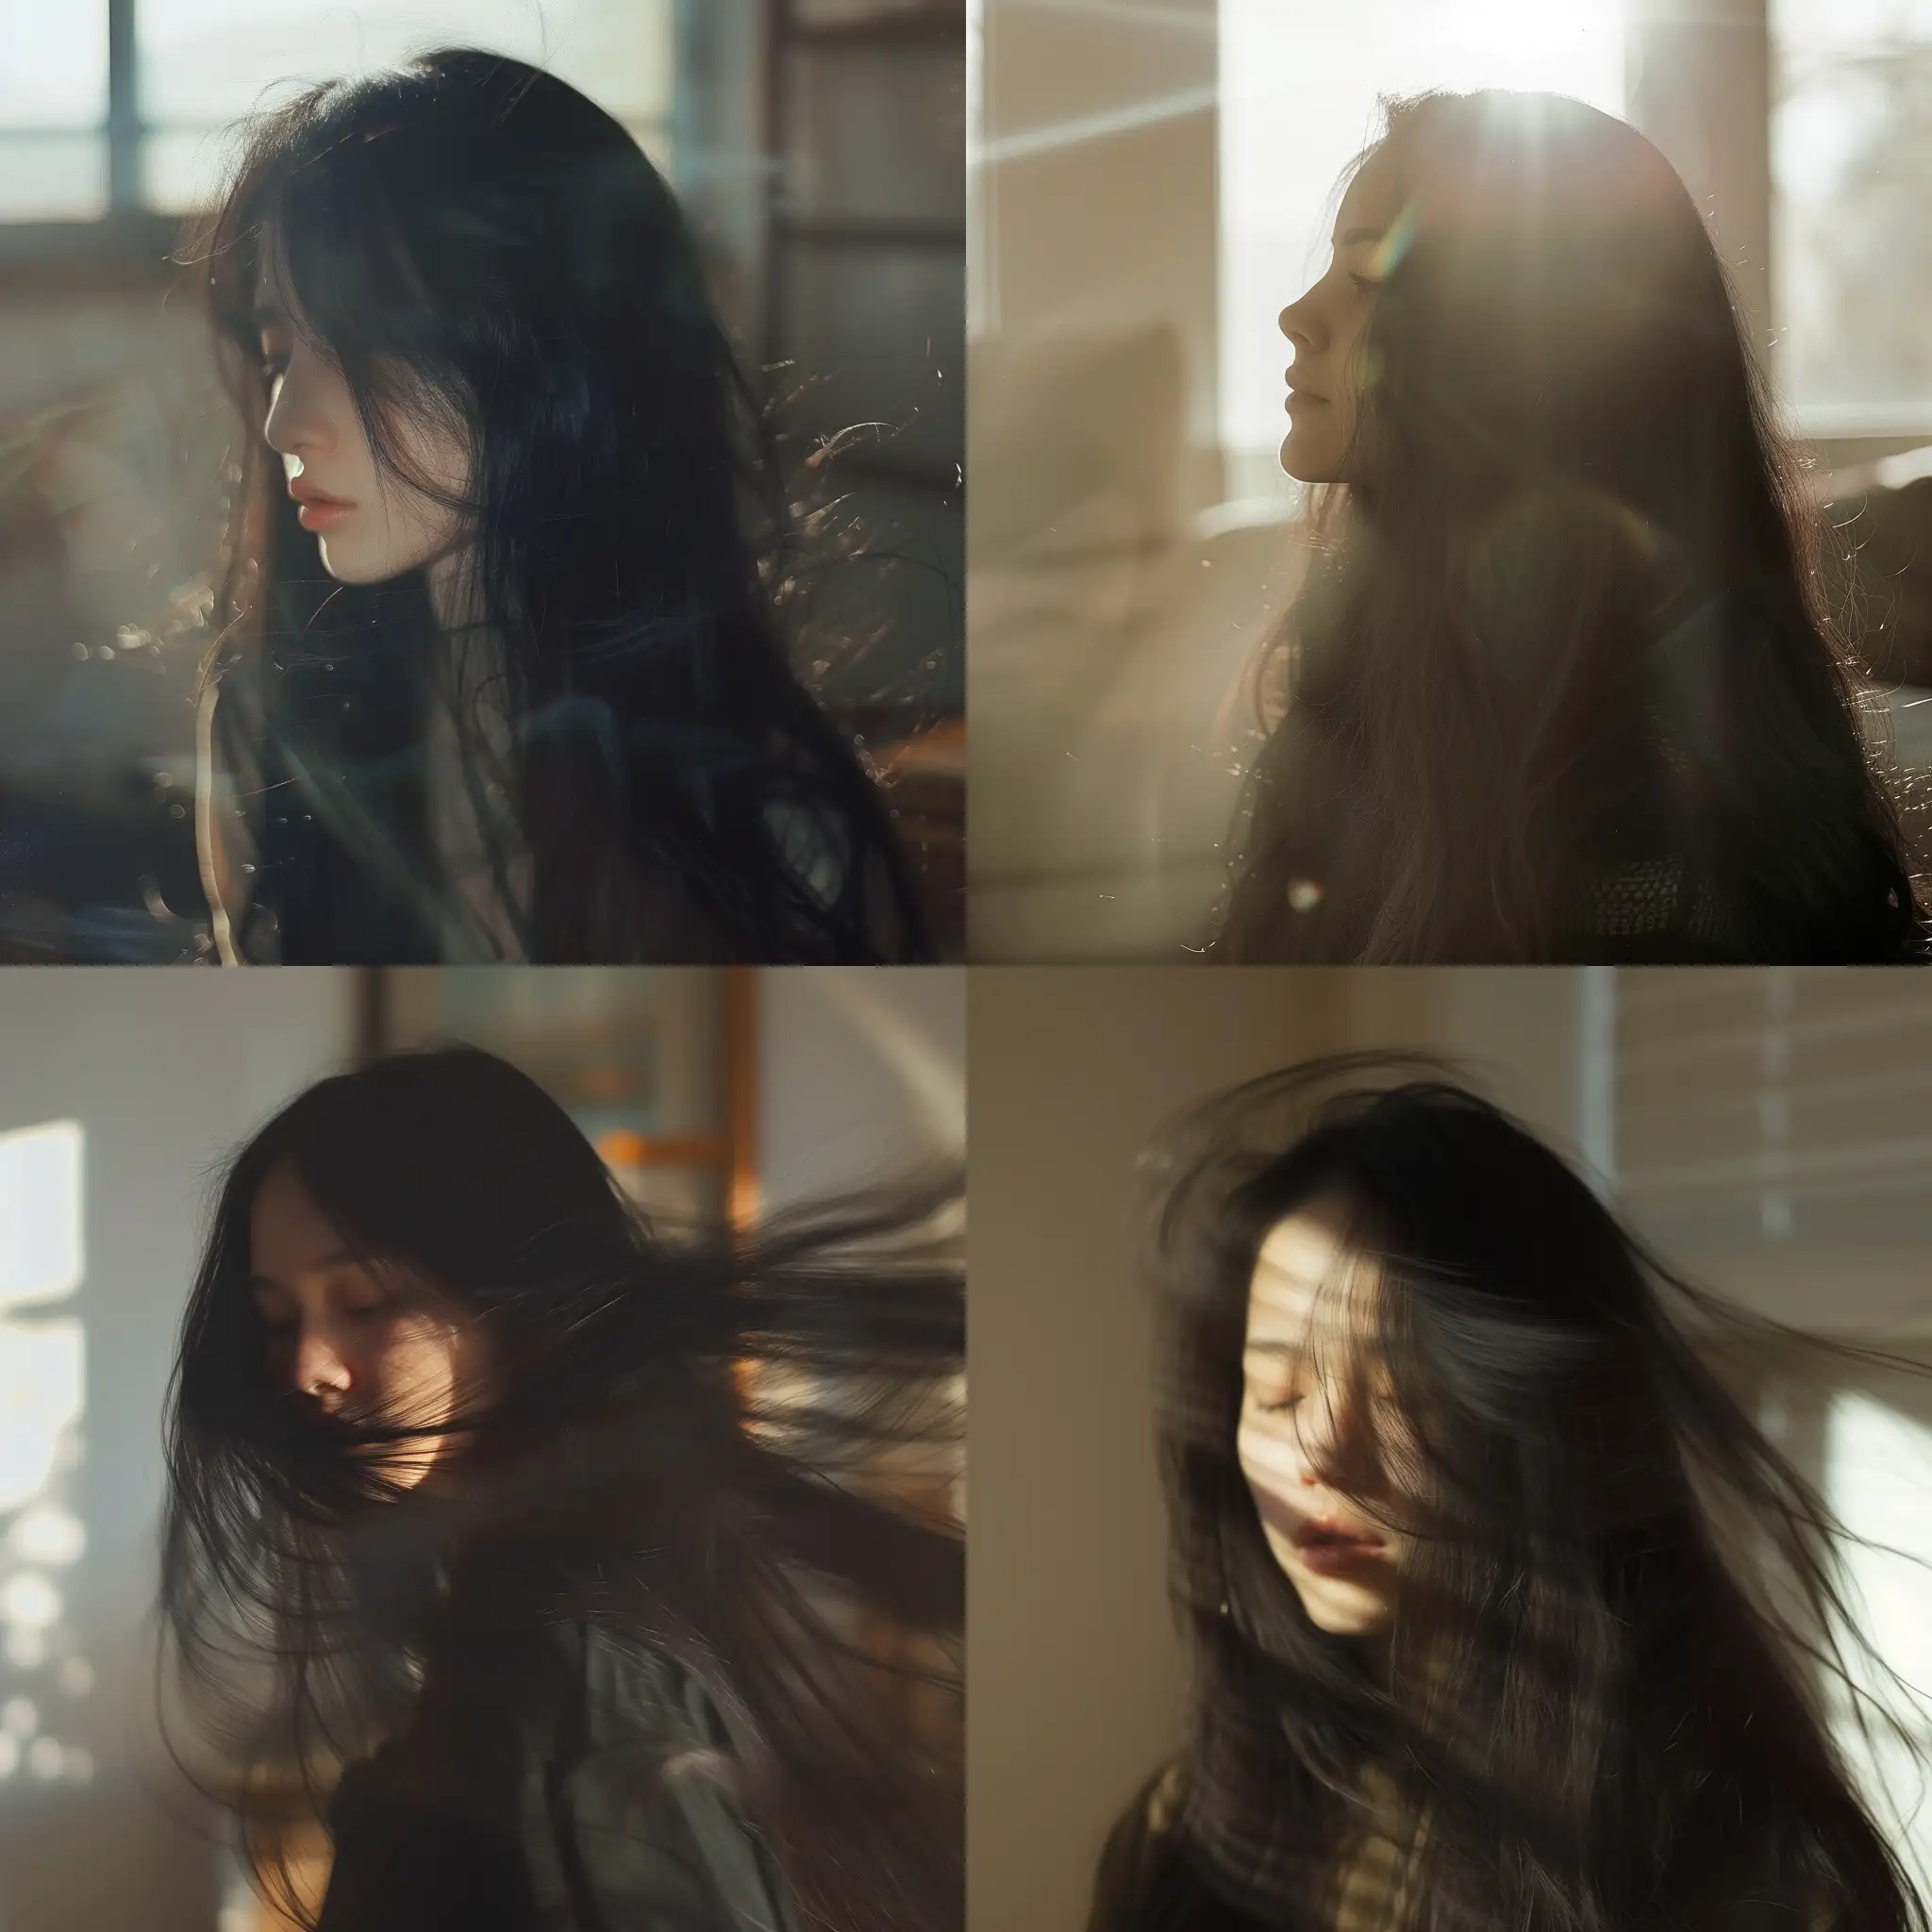 Sunlit-Room-Portrait-Girl-with-Long-Black-Hair-in-Blurry-Aesthetic-Setting